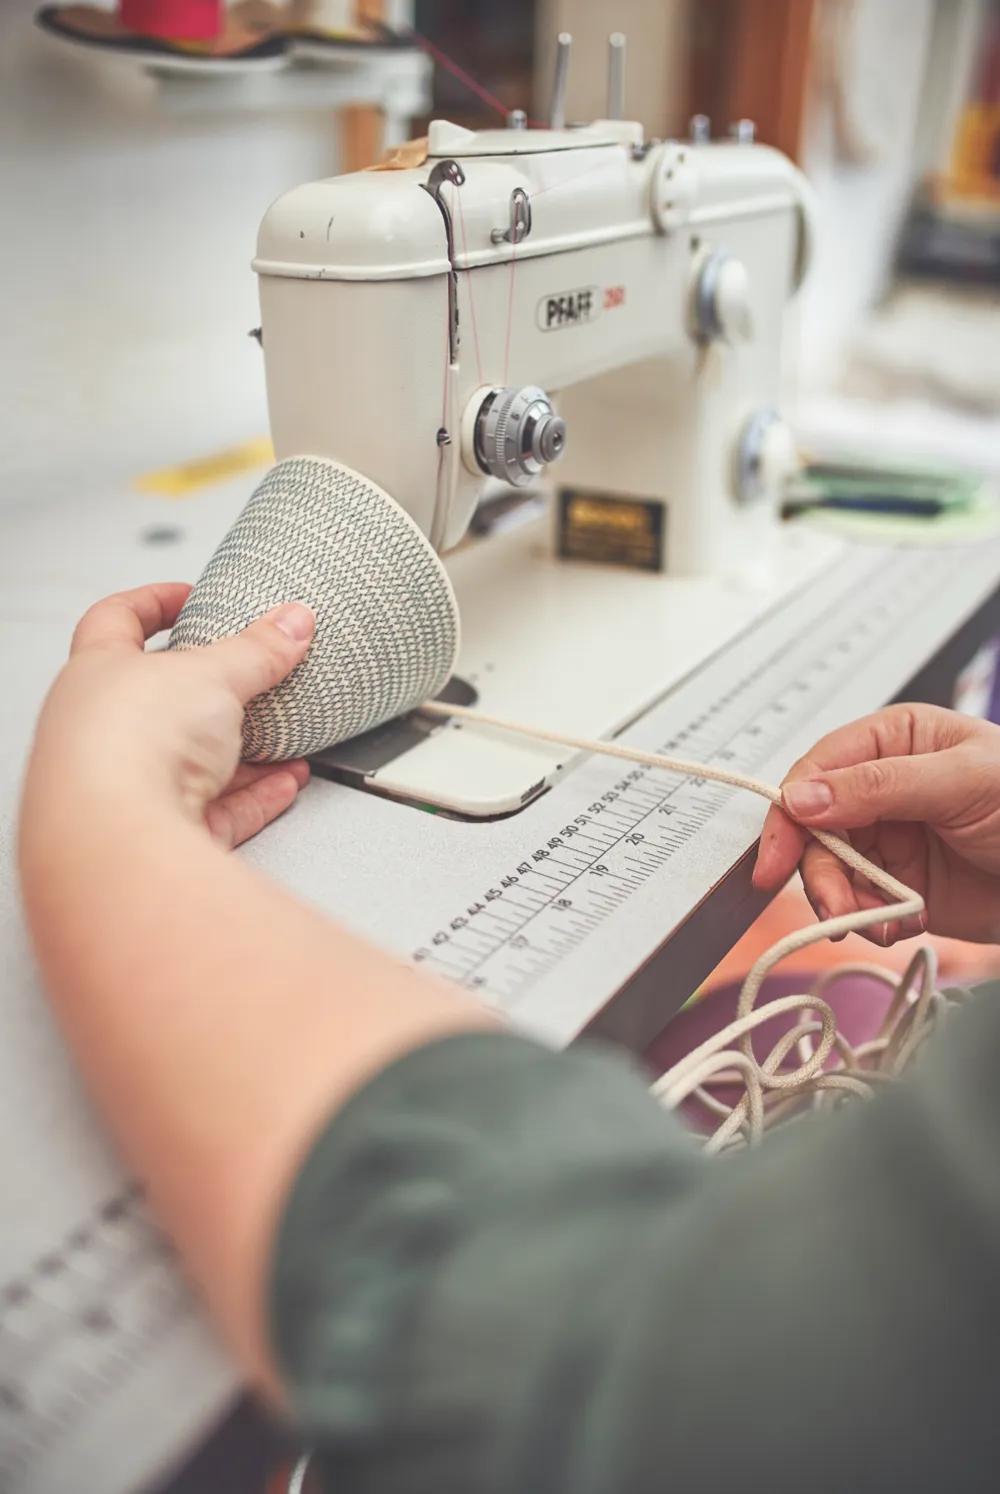 Jessica Geach stitching pieces by machine